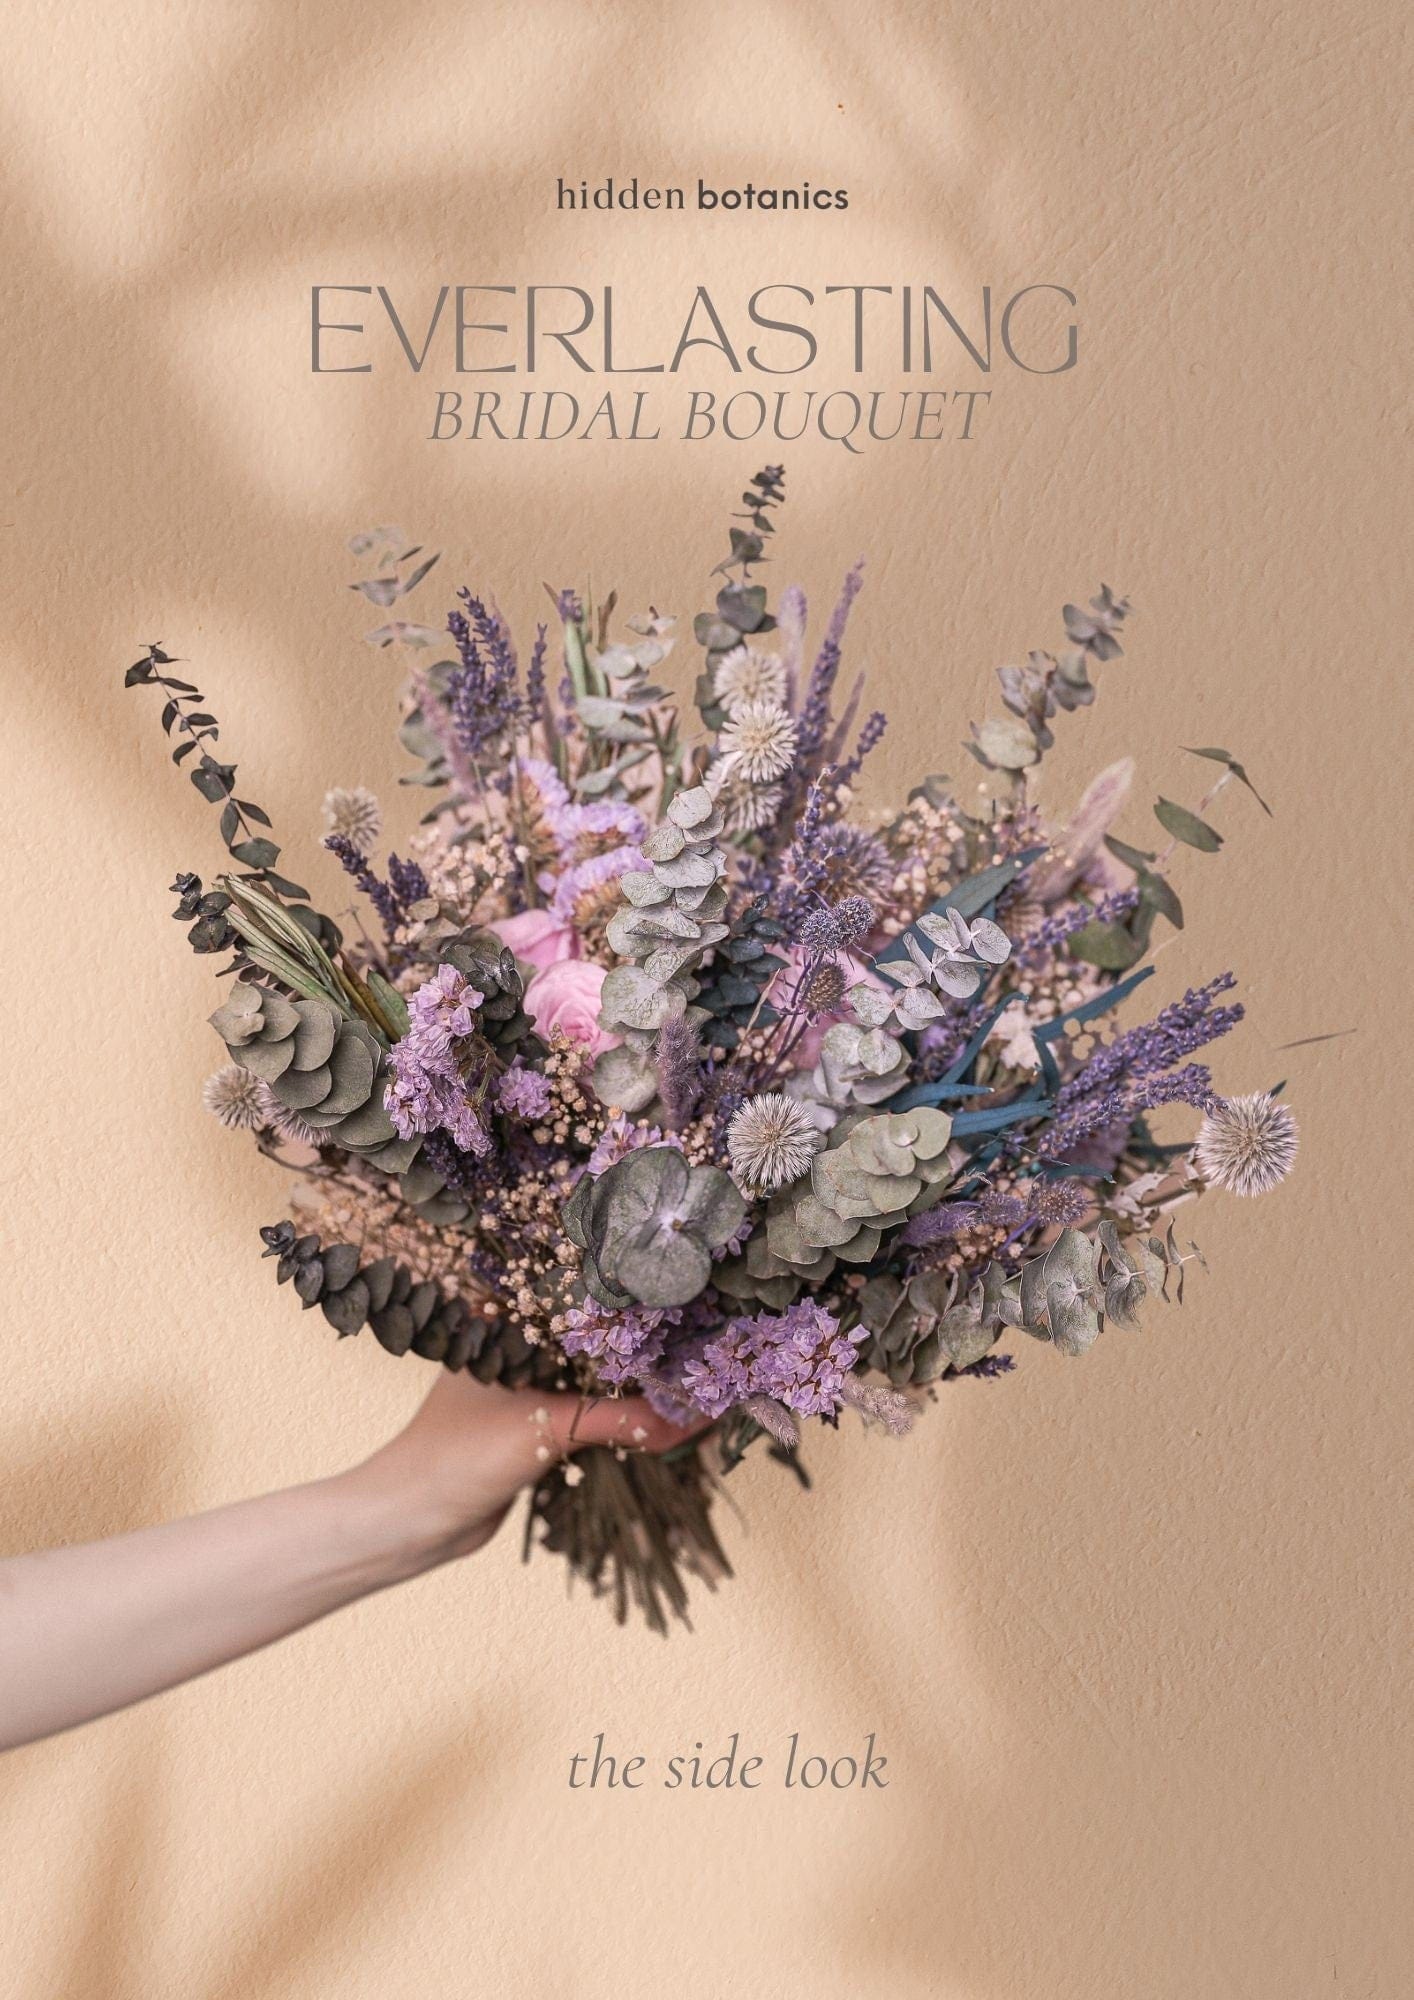 Personalised Pink Dried Preserved Flowers as Mini Everlasting -  Norway